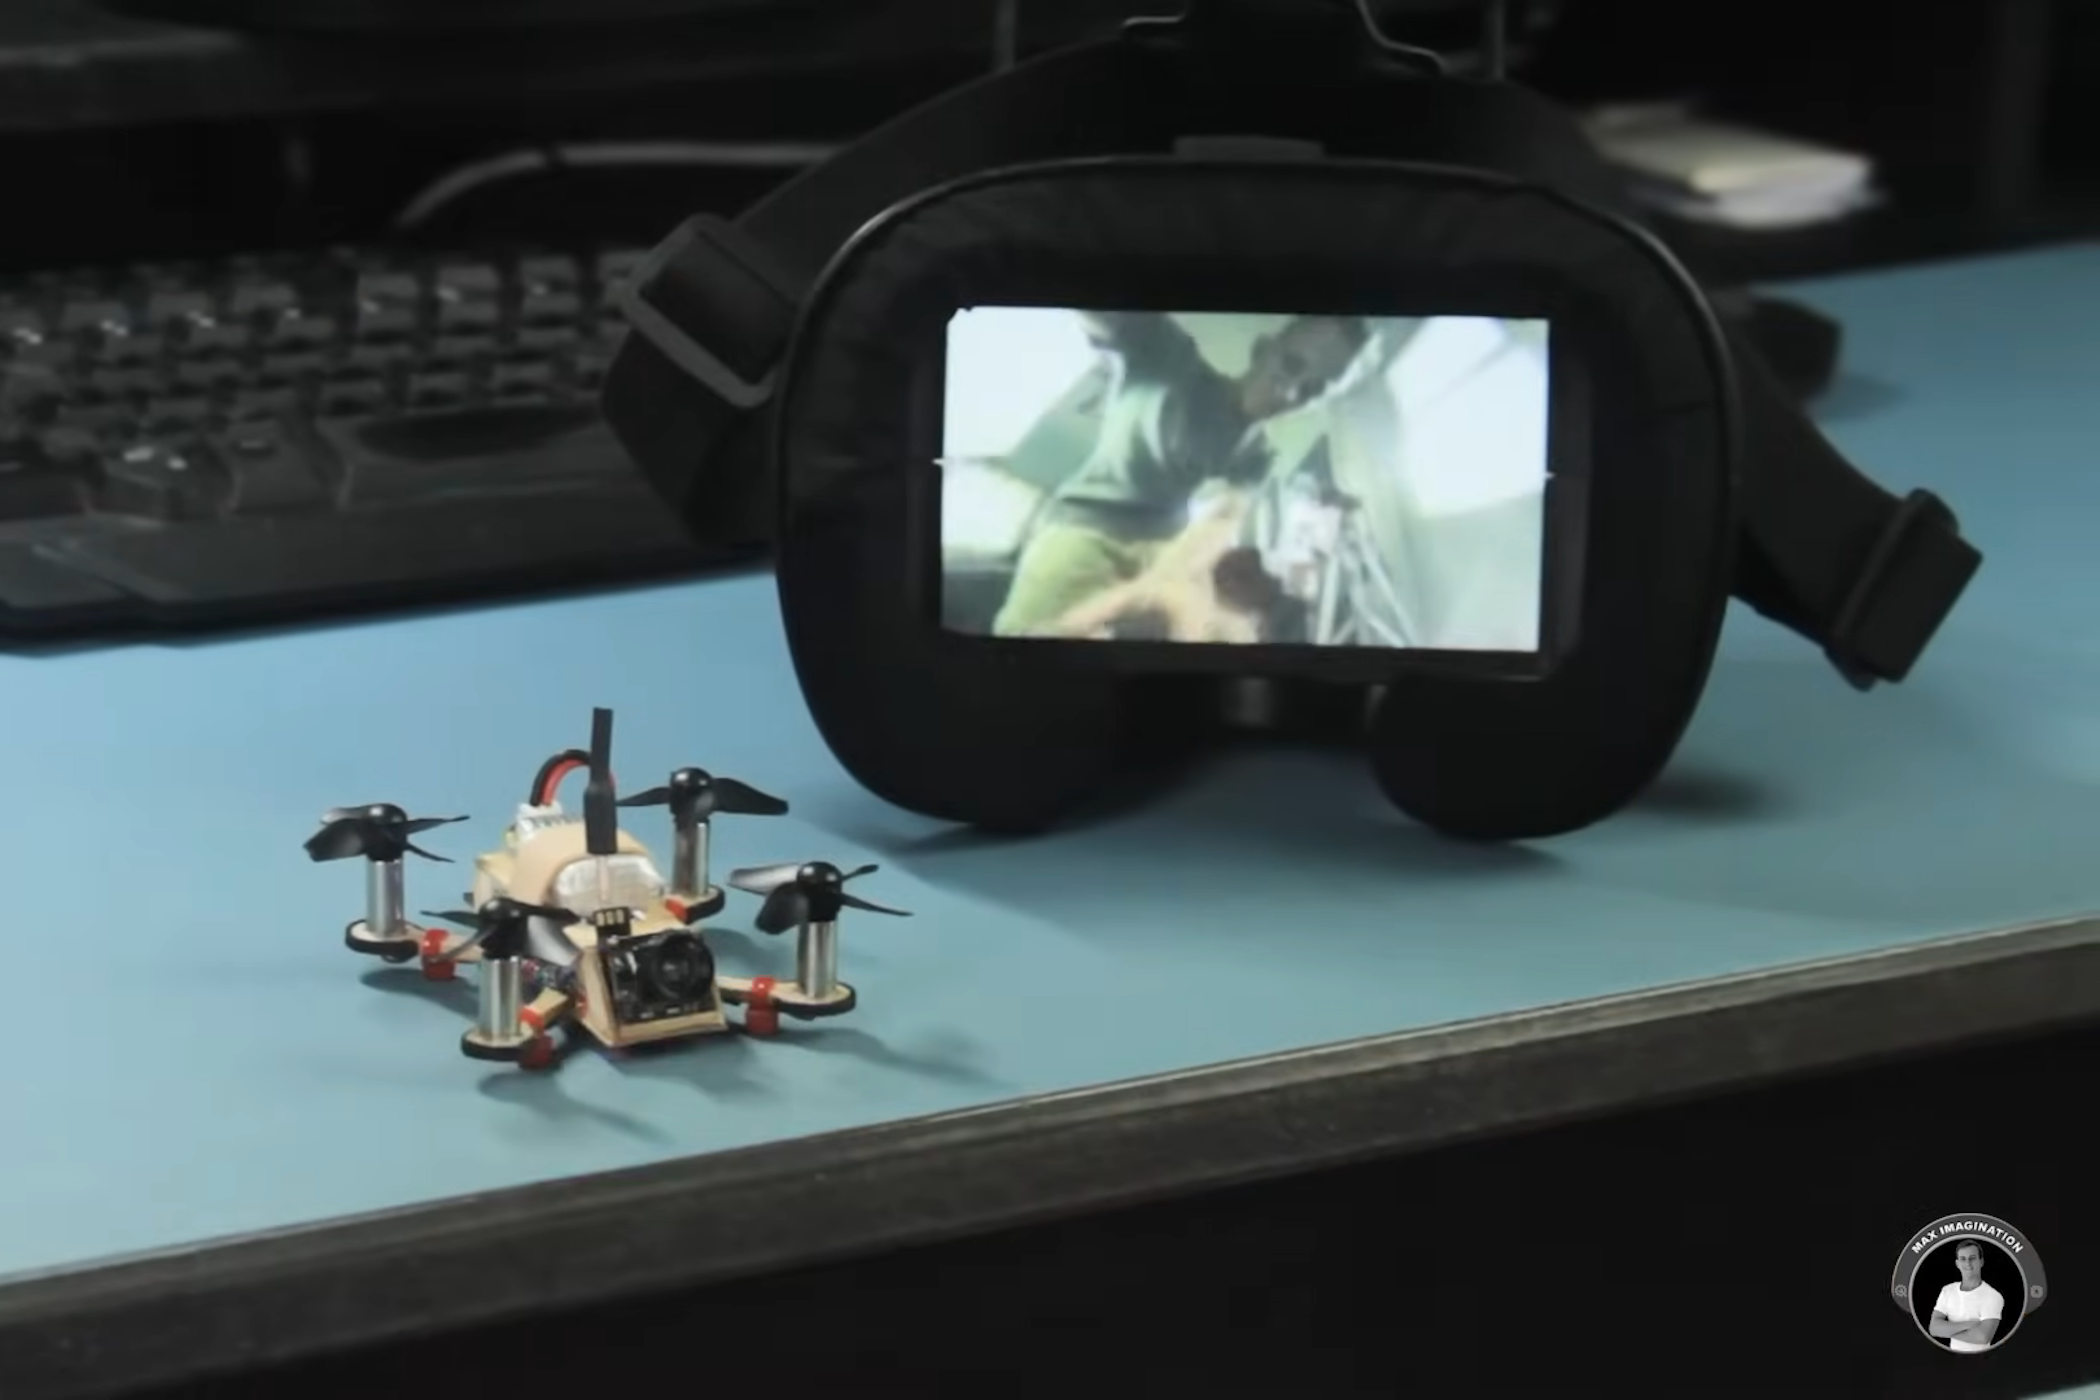 A DIY Arduino drone